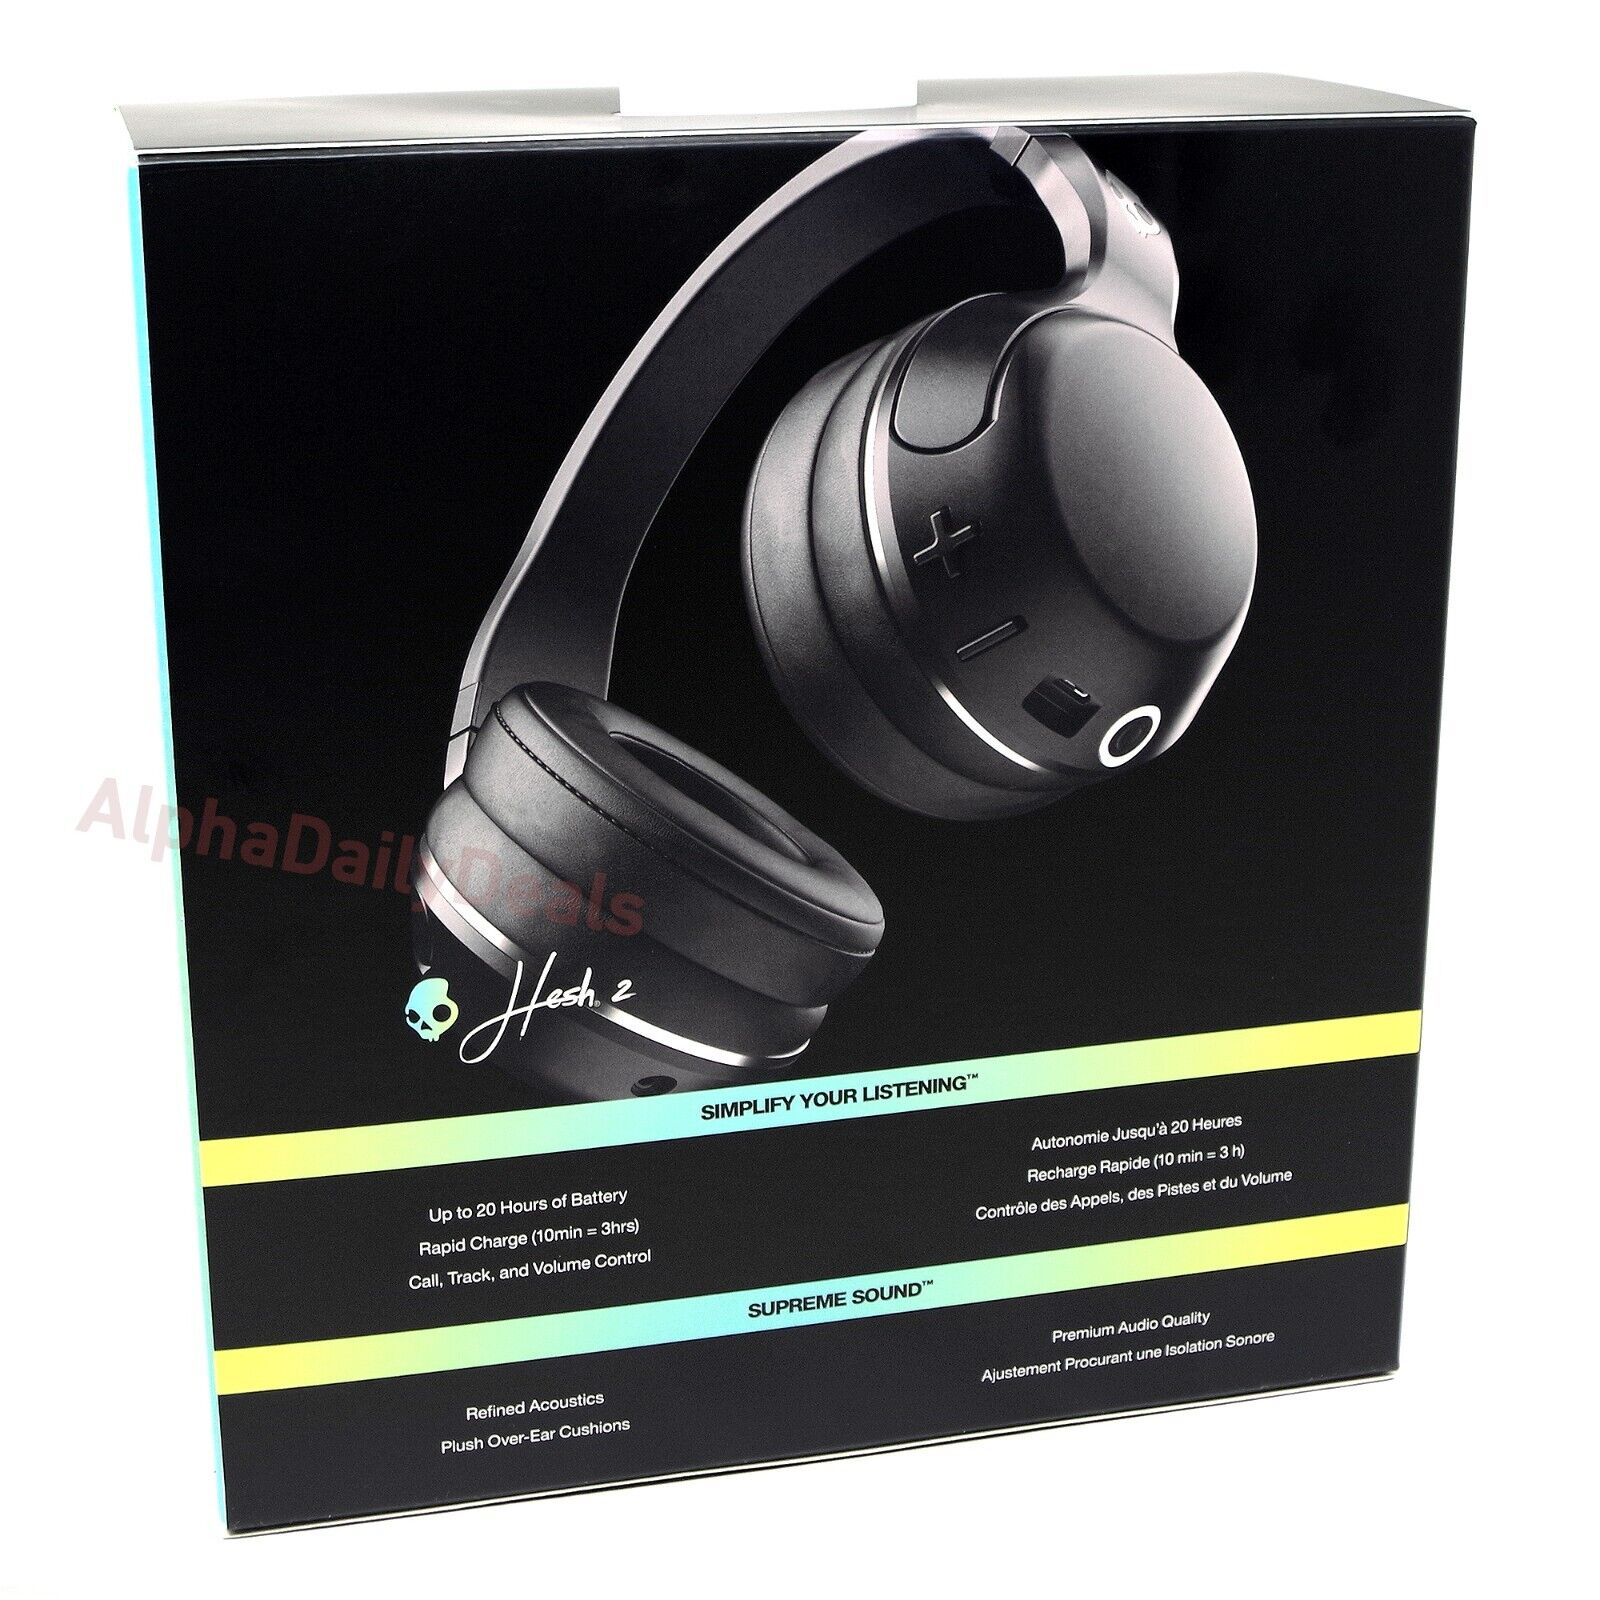 NEW Skullcandy Hesh 2 Wireless Bluetooth Over-Ear Headphones Black